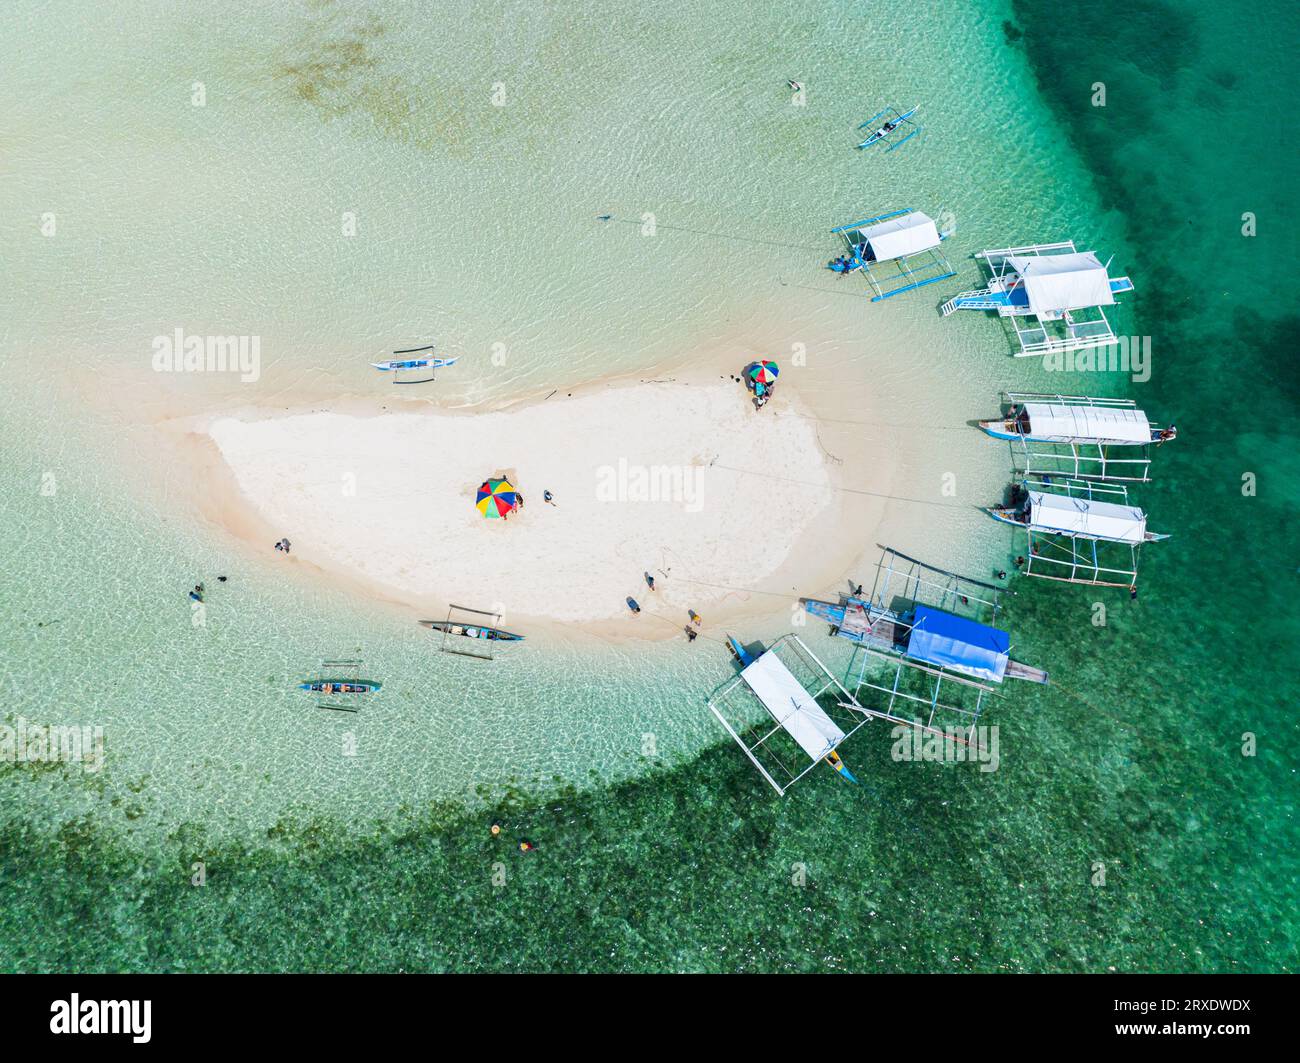 Drone view of boats on coastline of sandbar, turquoise water and colar reefs. Barobo, Surigao del Sur. Philippines. Stock Photo